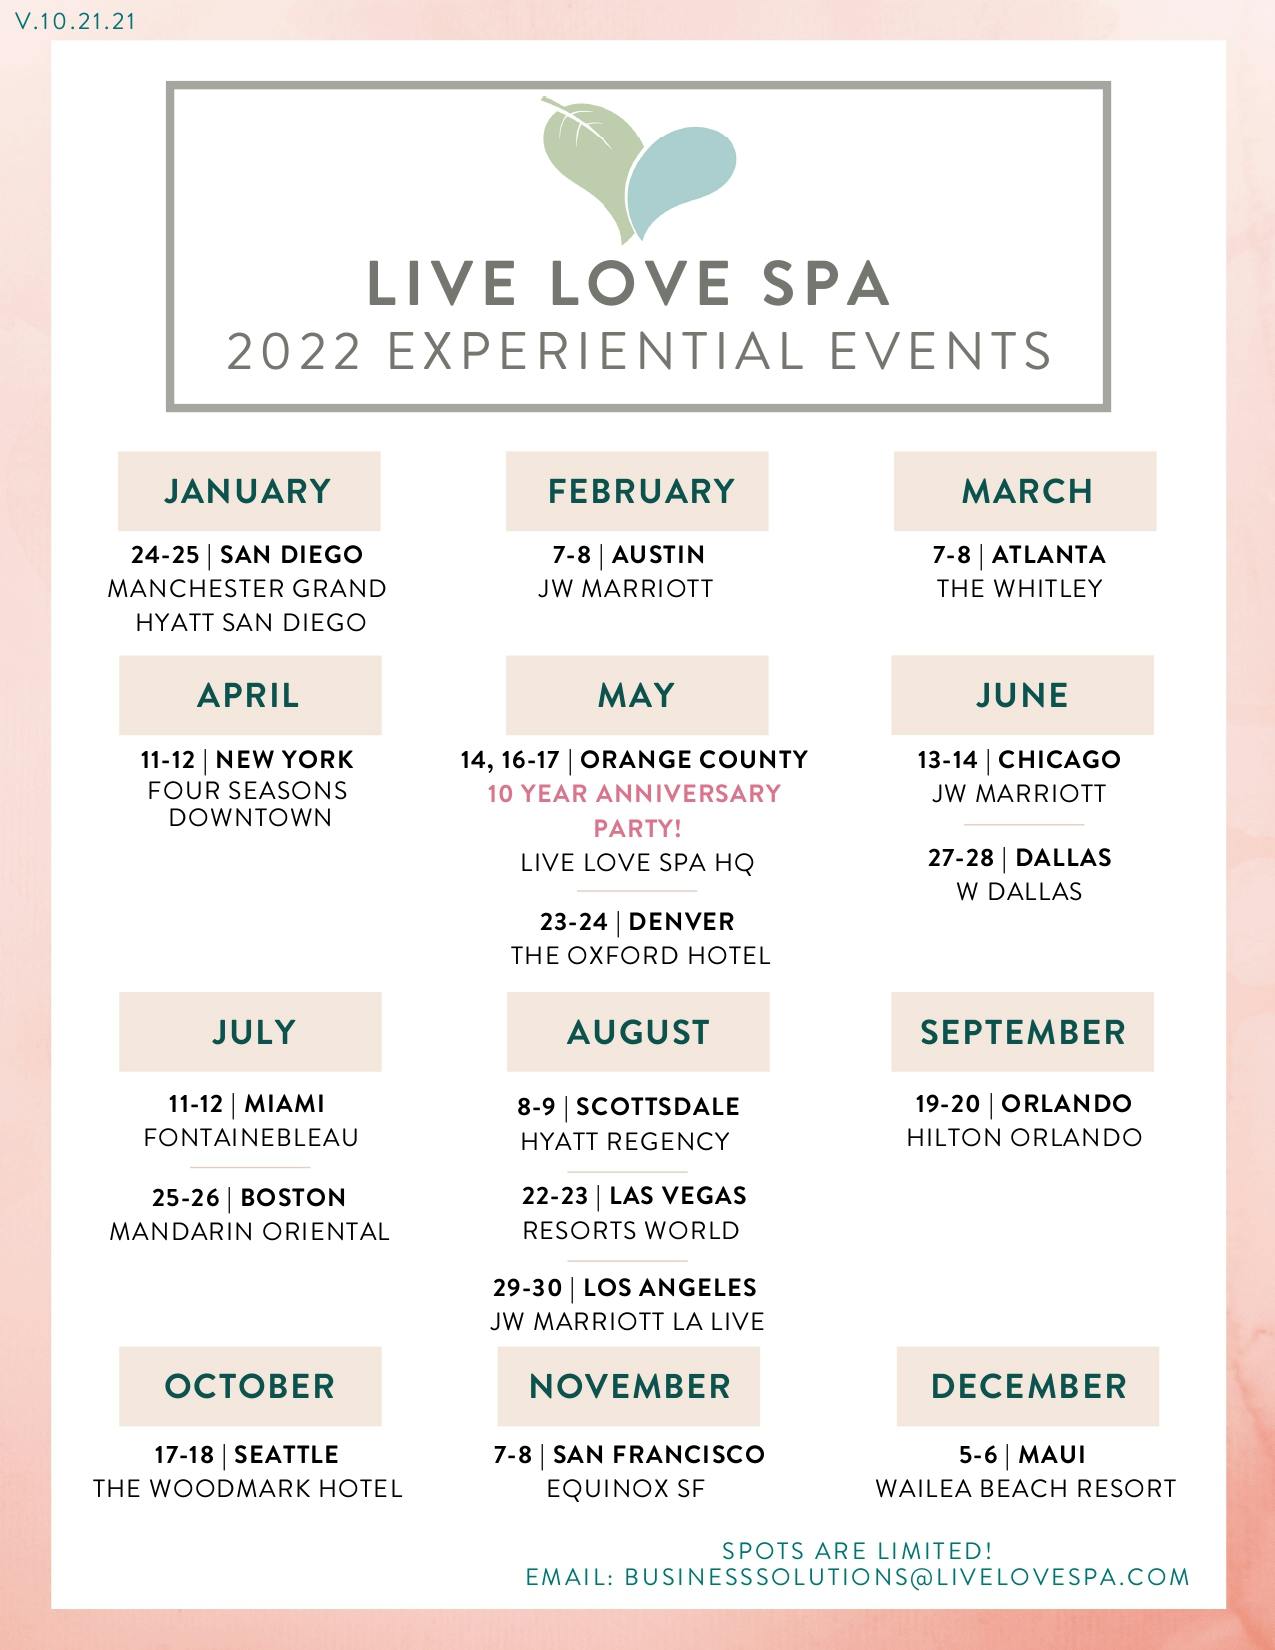 Miami Calendar Of Events 2022 Live Love Spa 2022 Events Calendar Released | Wellspa 360